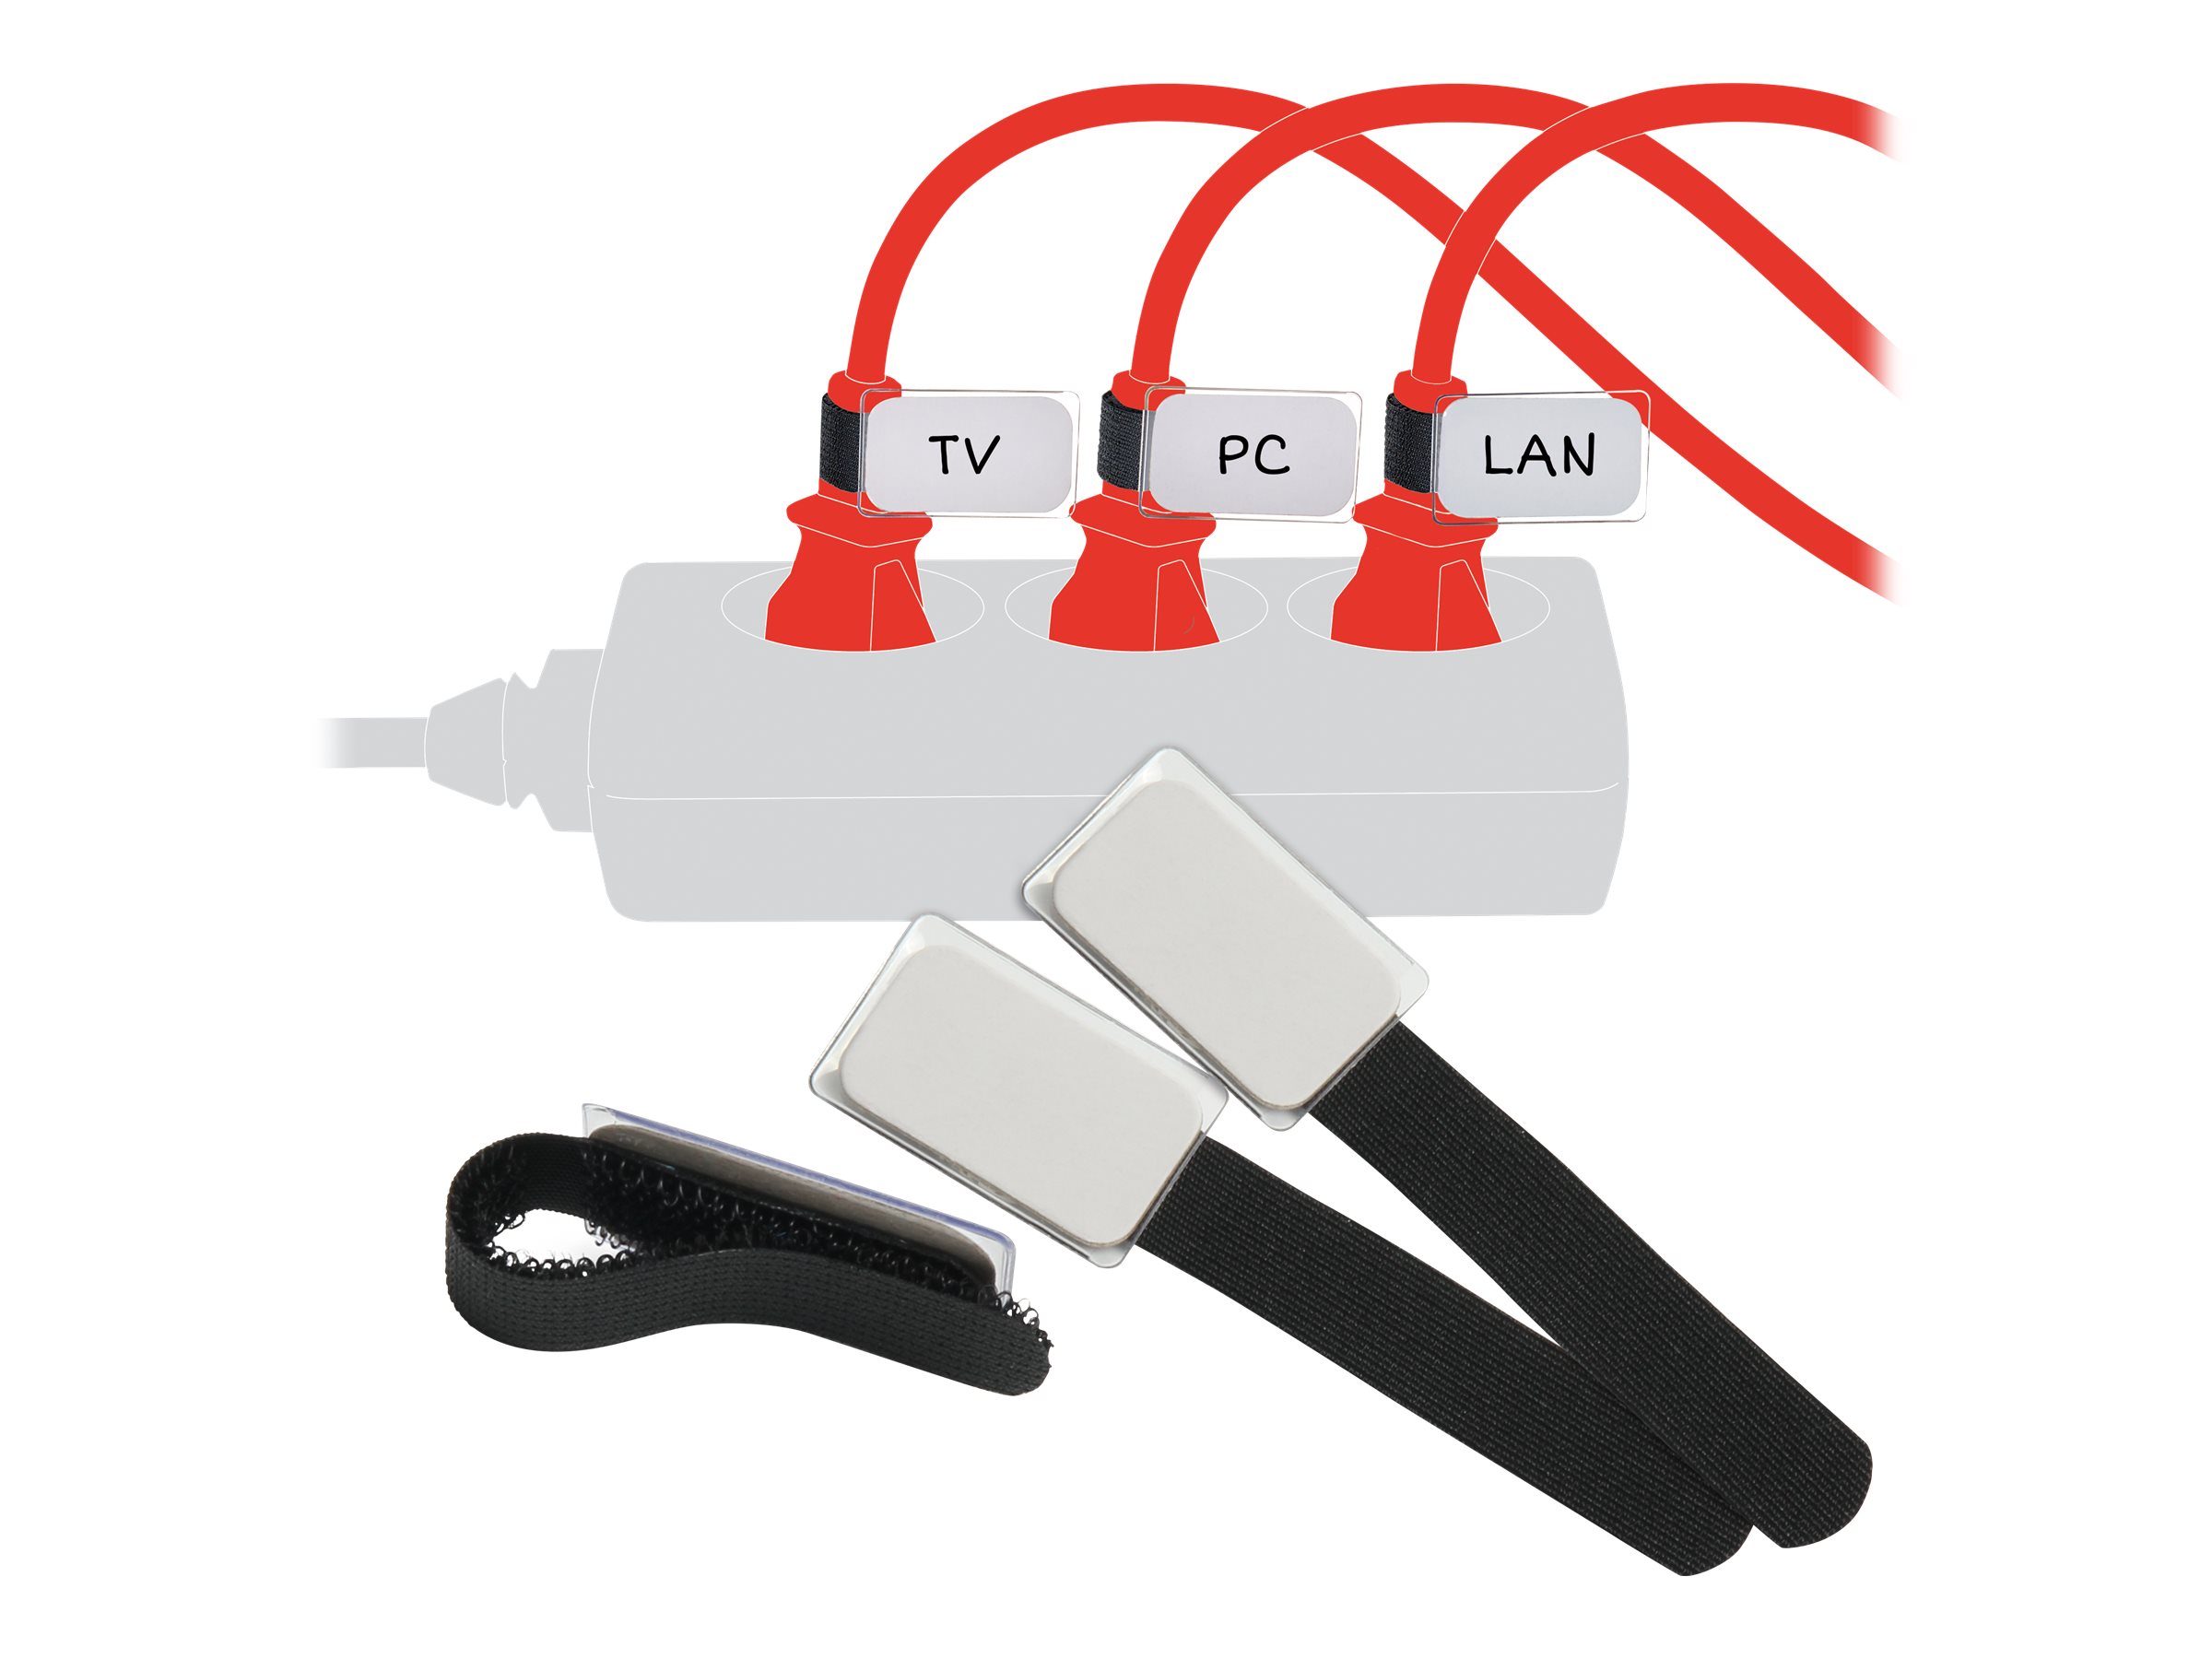 Label-the-cable LTC MINI TAGS - Draht-/Kabel-Marker - 9 cm - Schwarz (Packung mit 10)